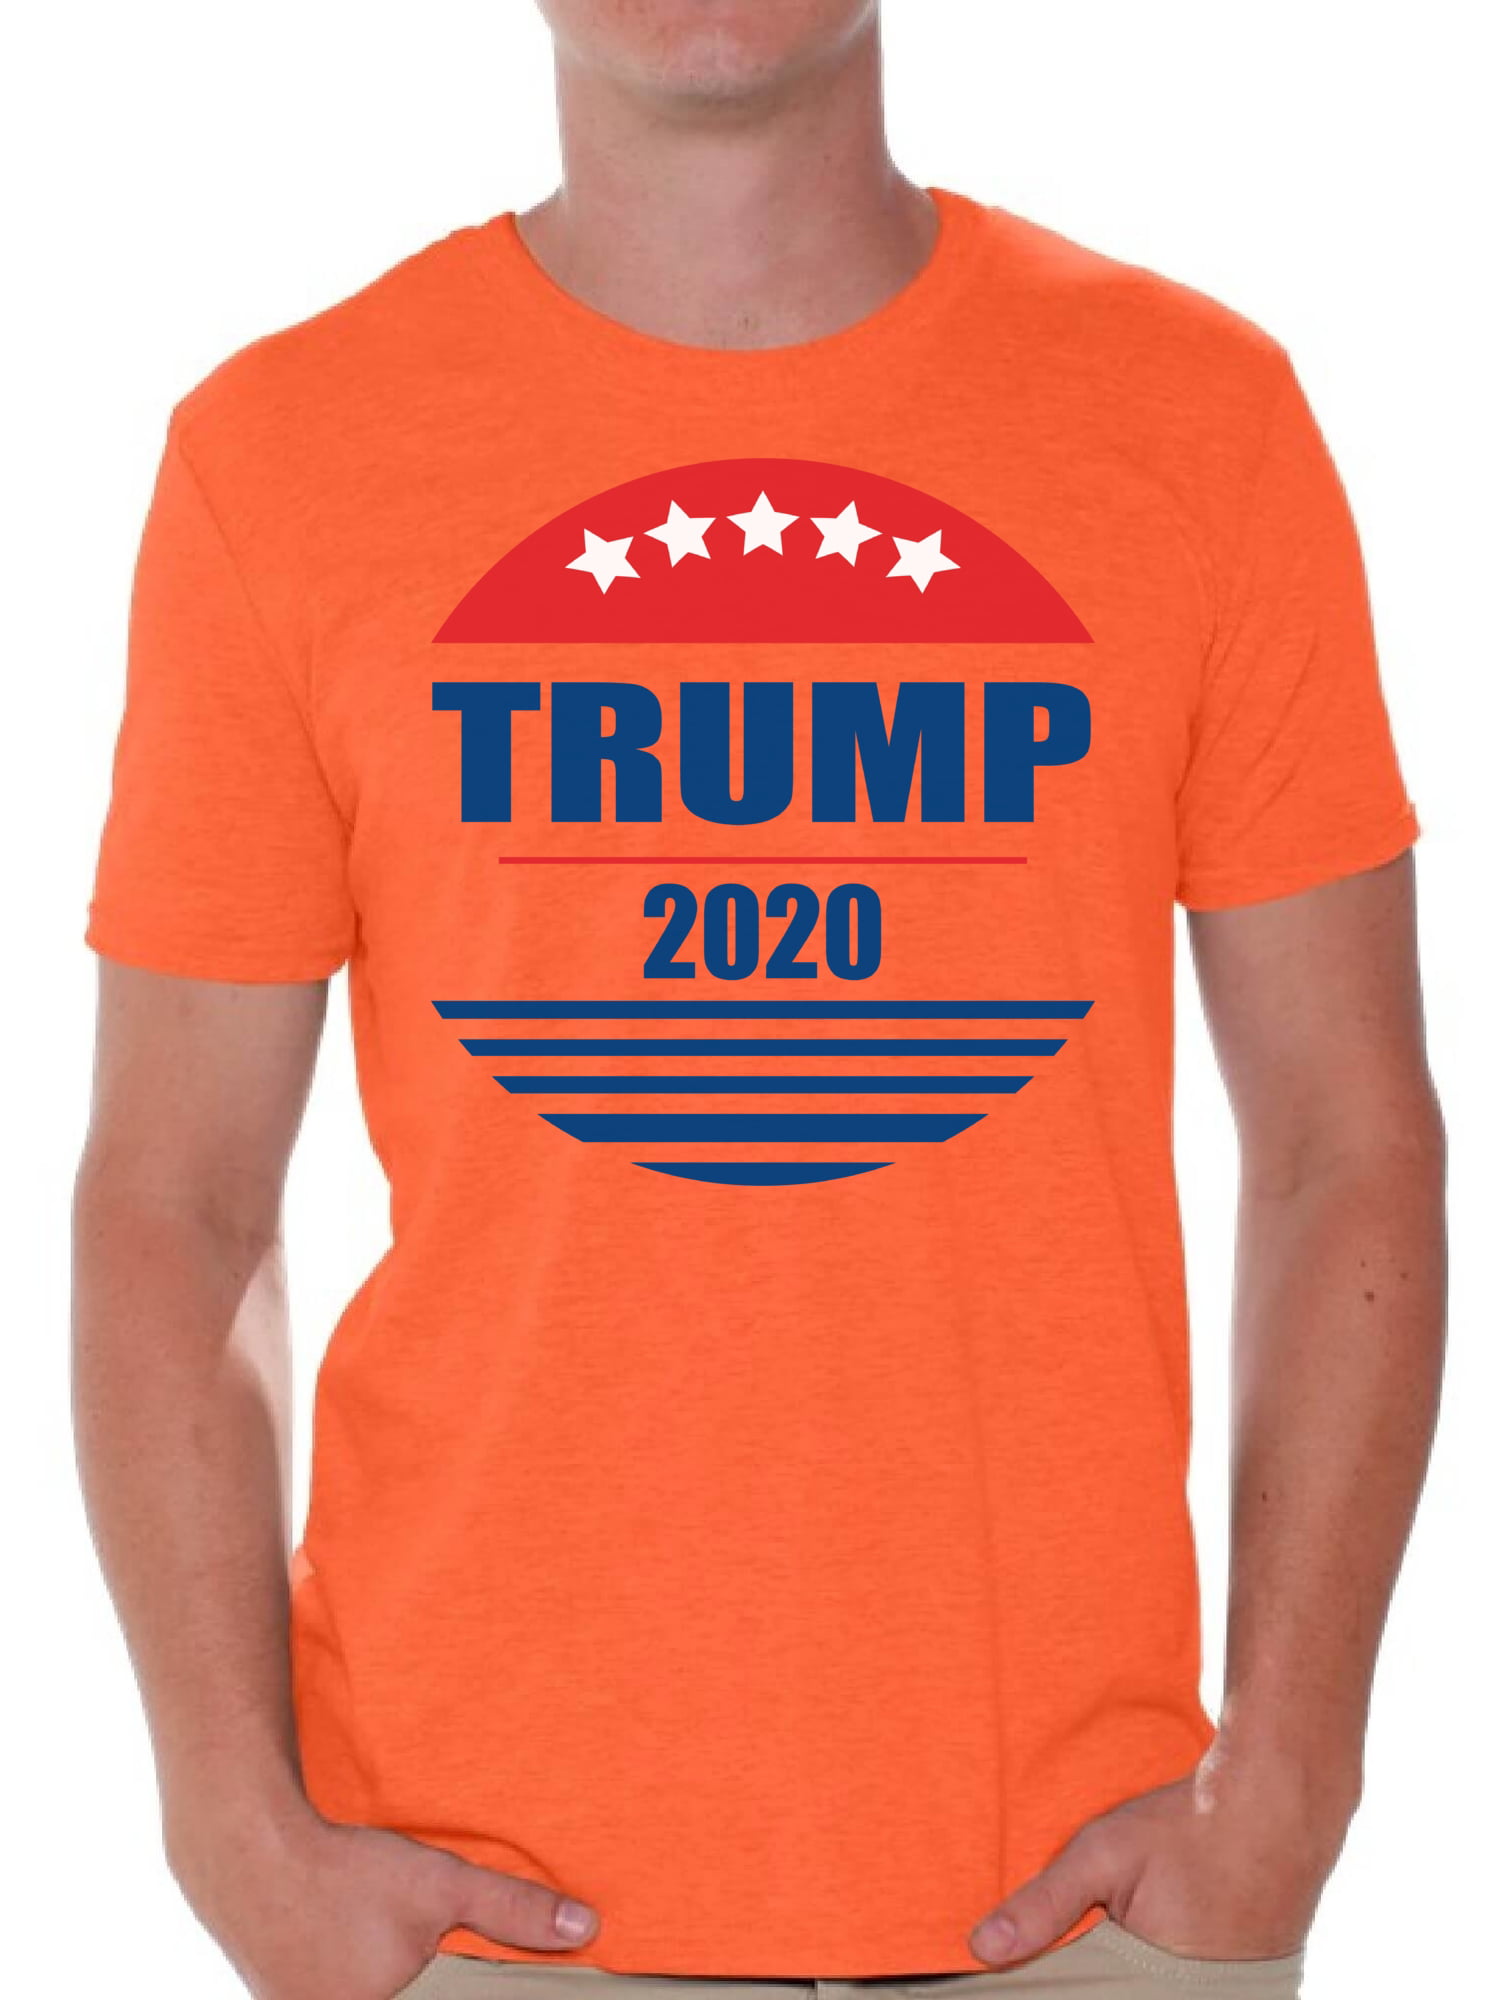 Trump Wins Funny Sci-Fi TV Show Political Adult Tank Top T-Shirt Tees Tshirt 